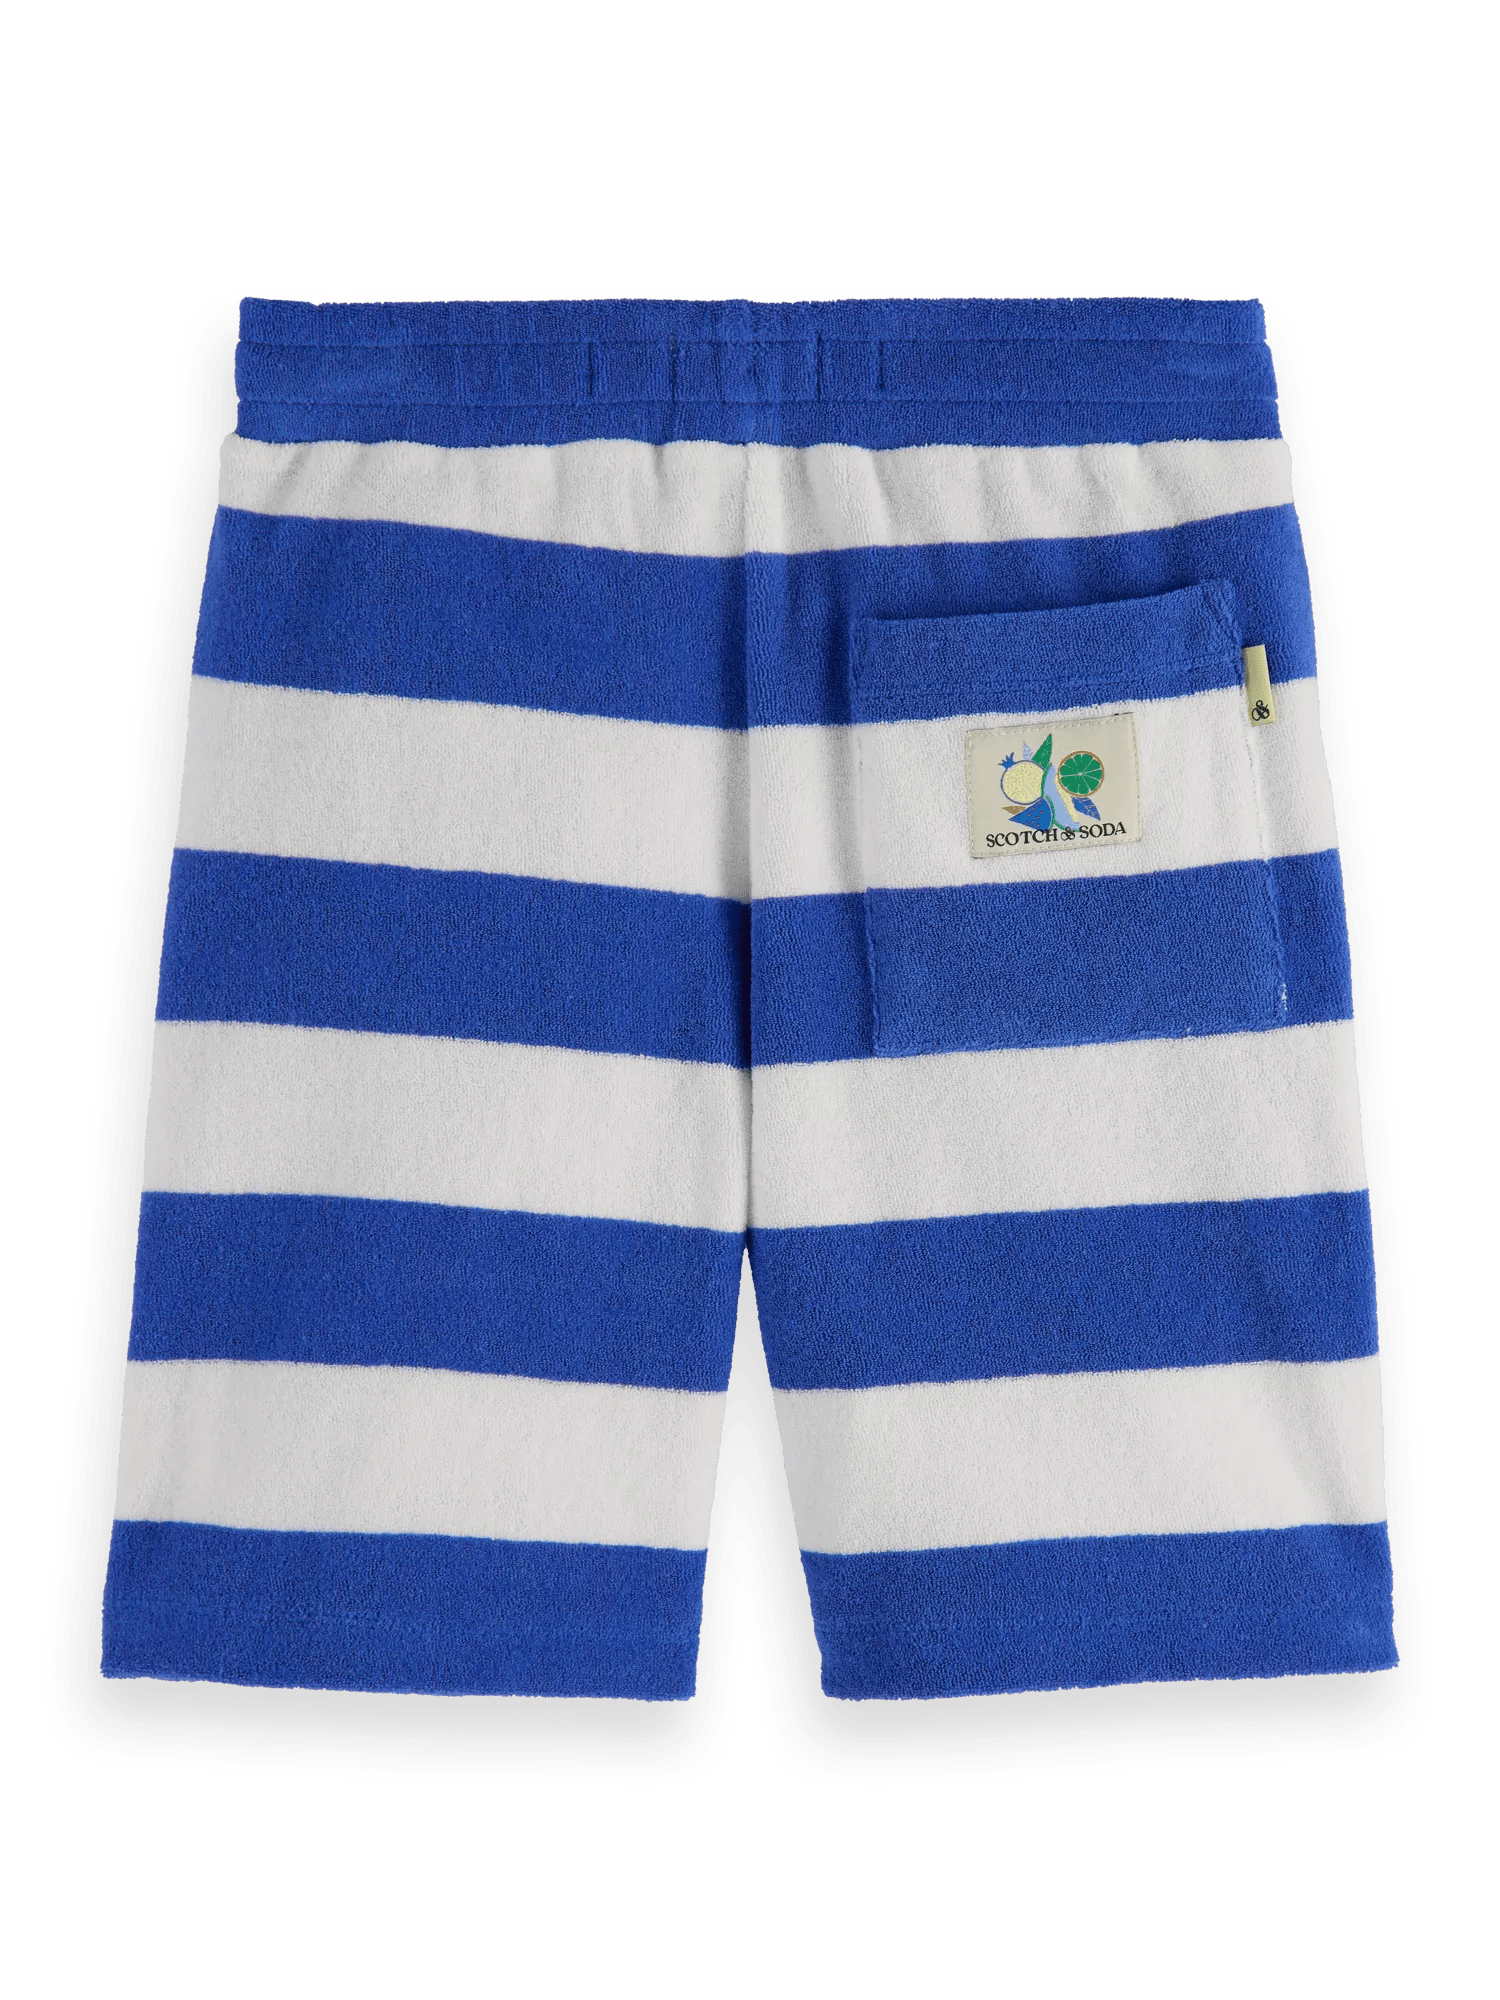 Scotch & Soda Yarn-dyed striped towelling shorts BCK